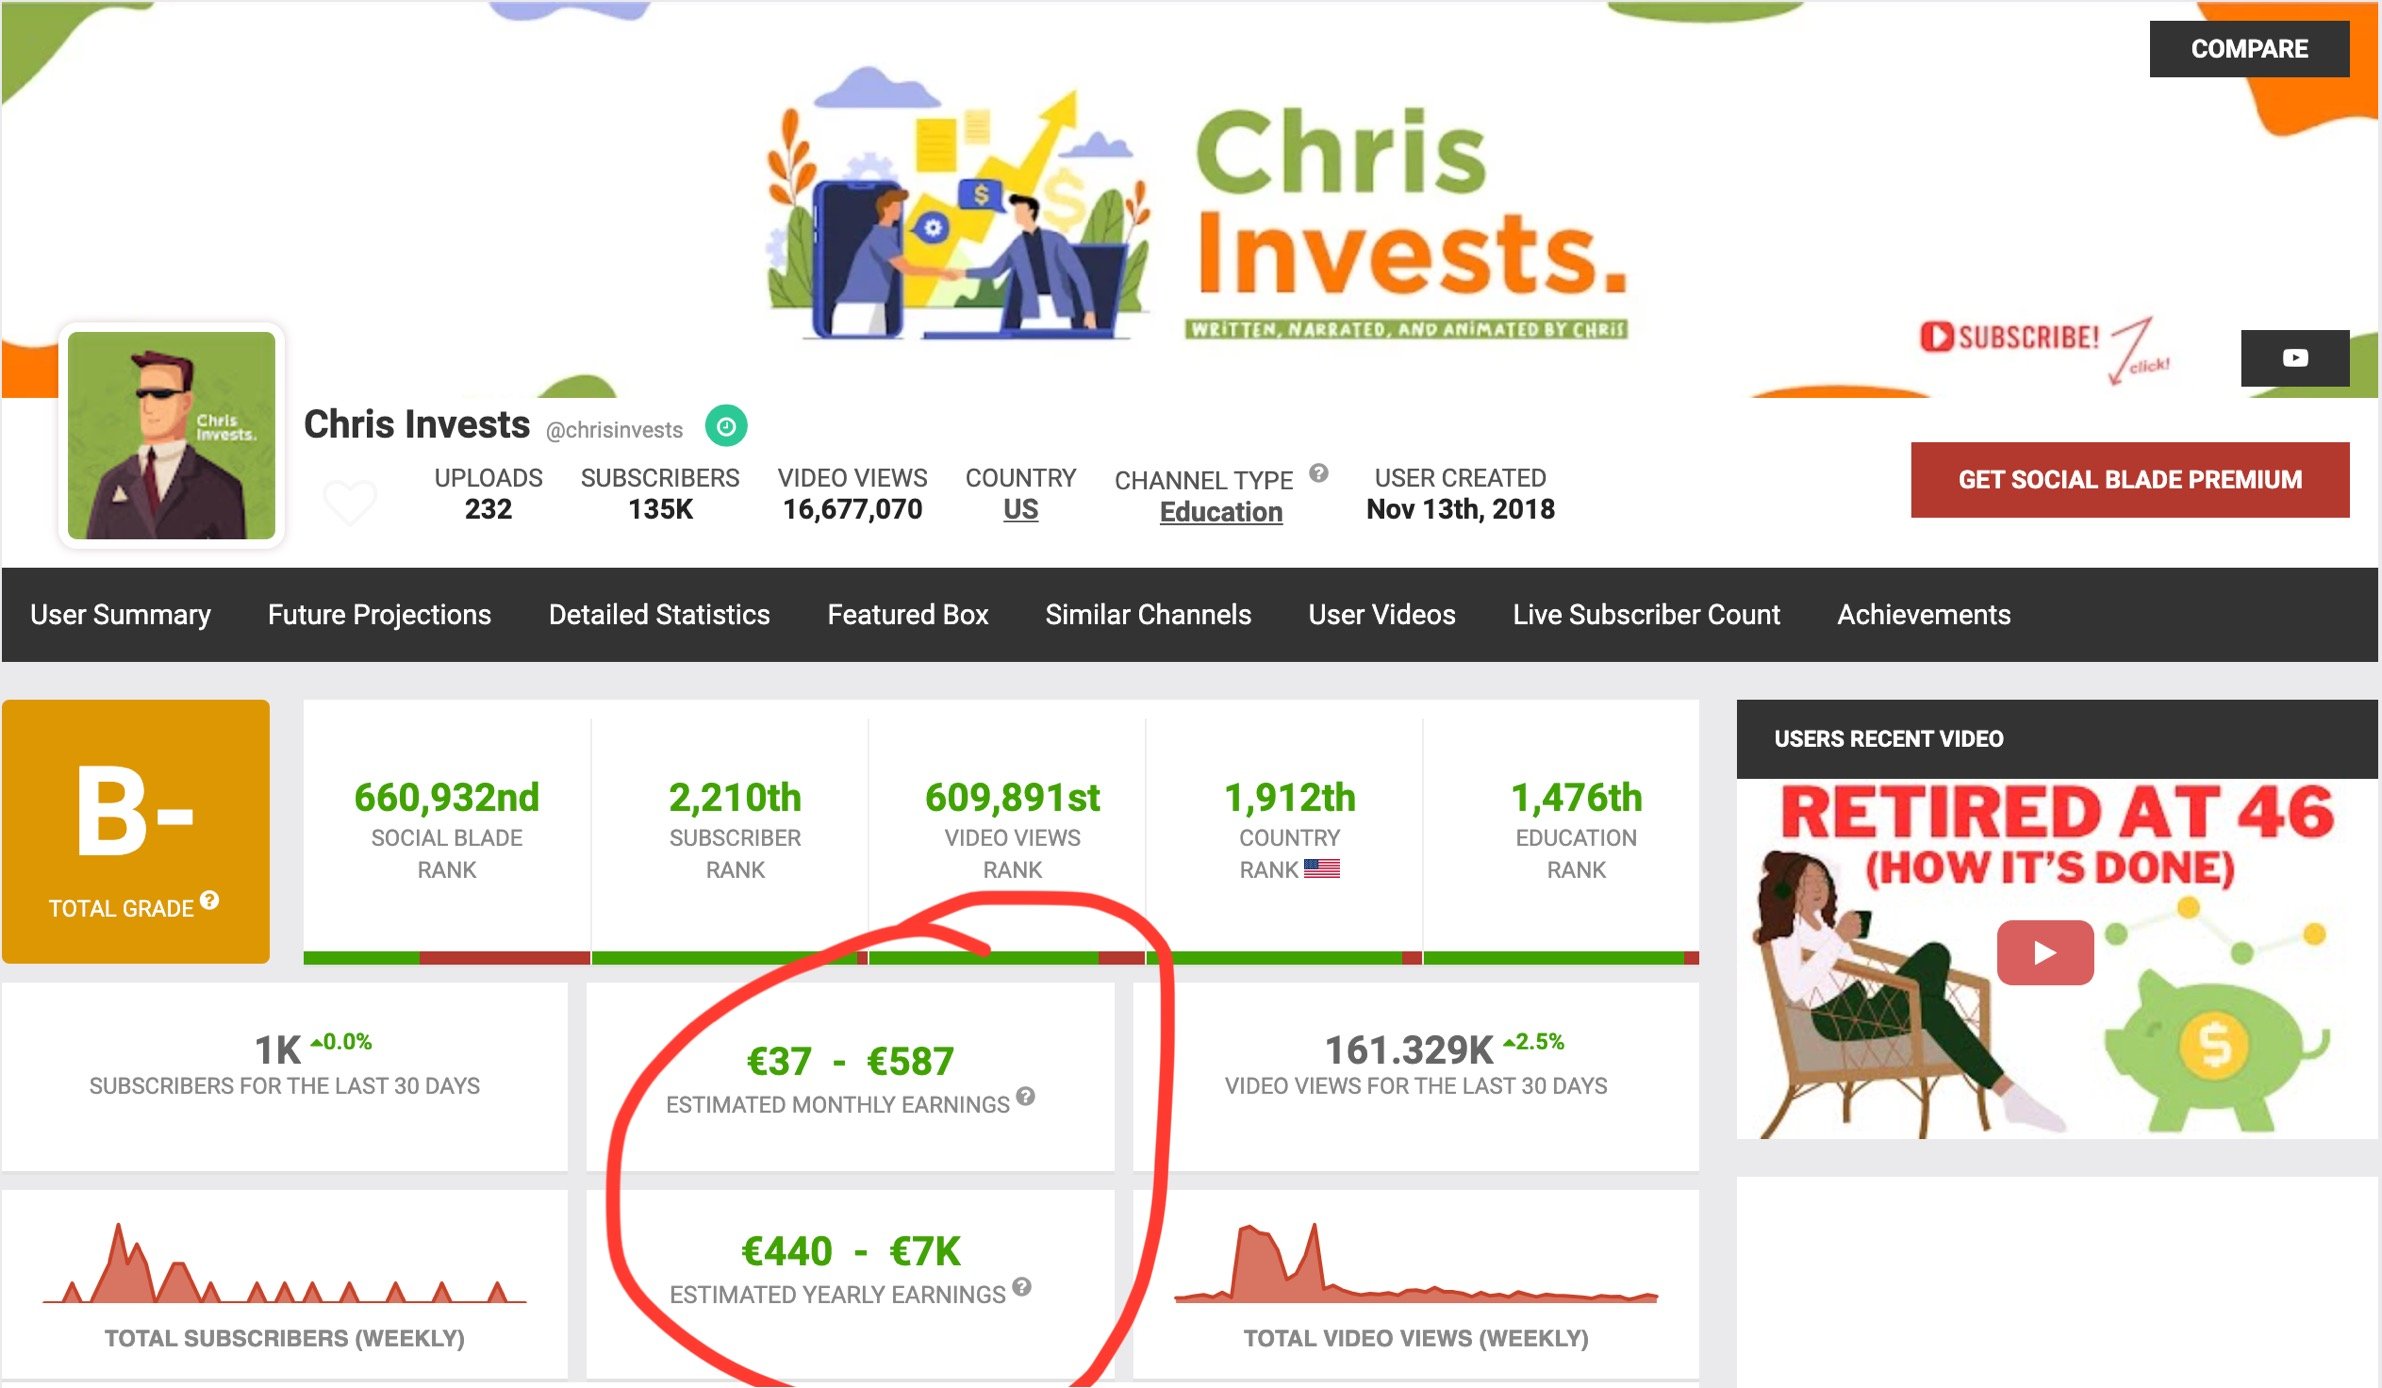 Chris invests